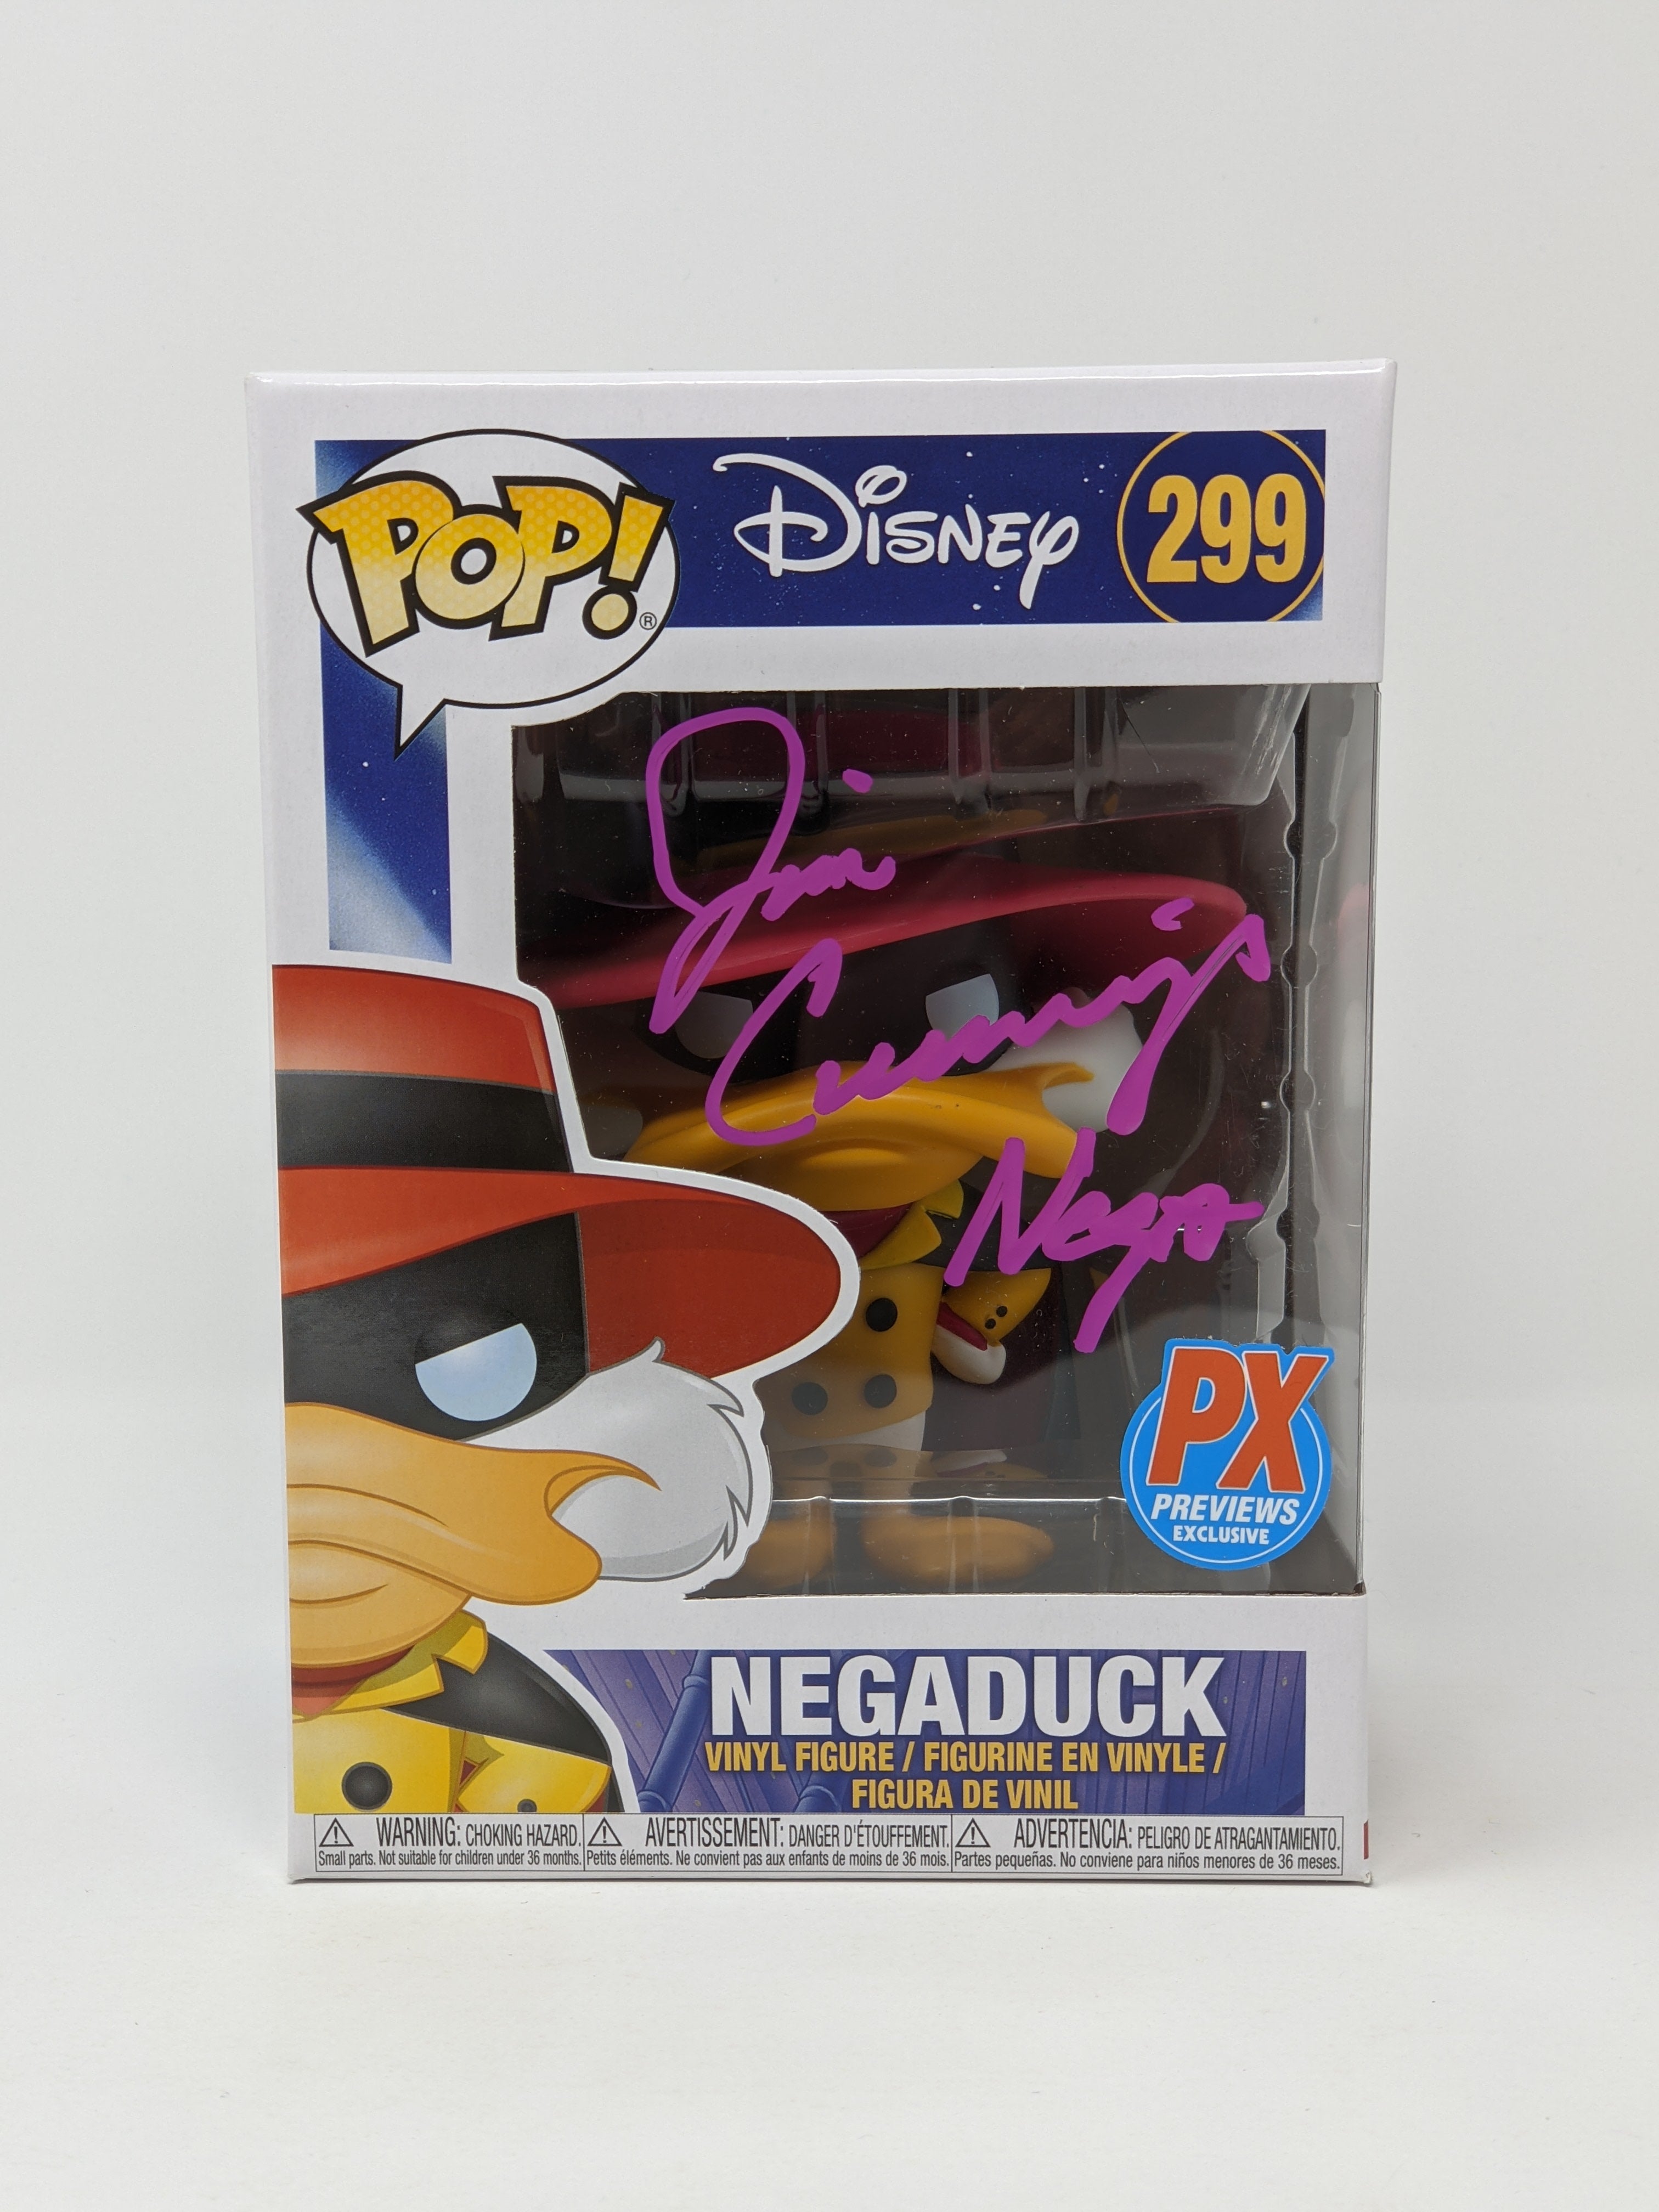 Jim Cummings Darkwing Duck Negaduck #299 Exclusive Signed Funko Pop JSA COA Certified Autograph